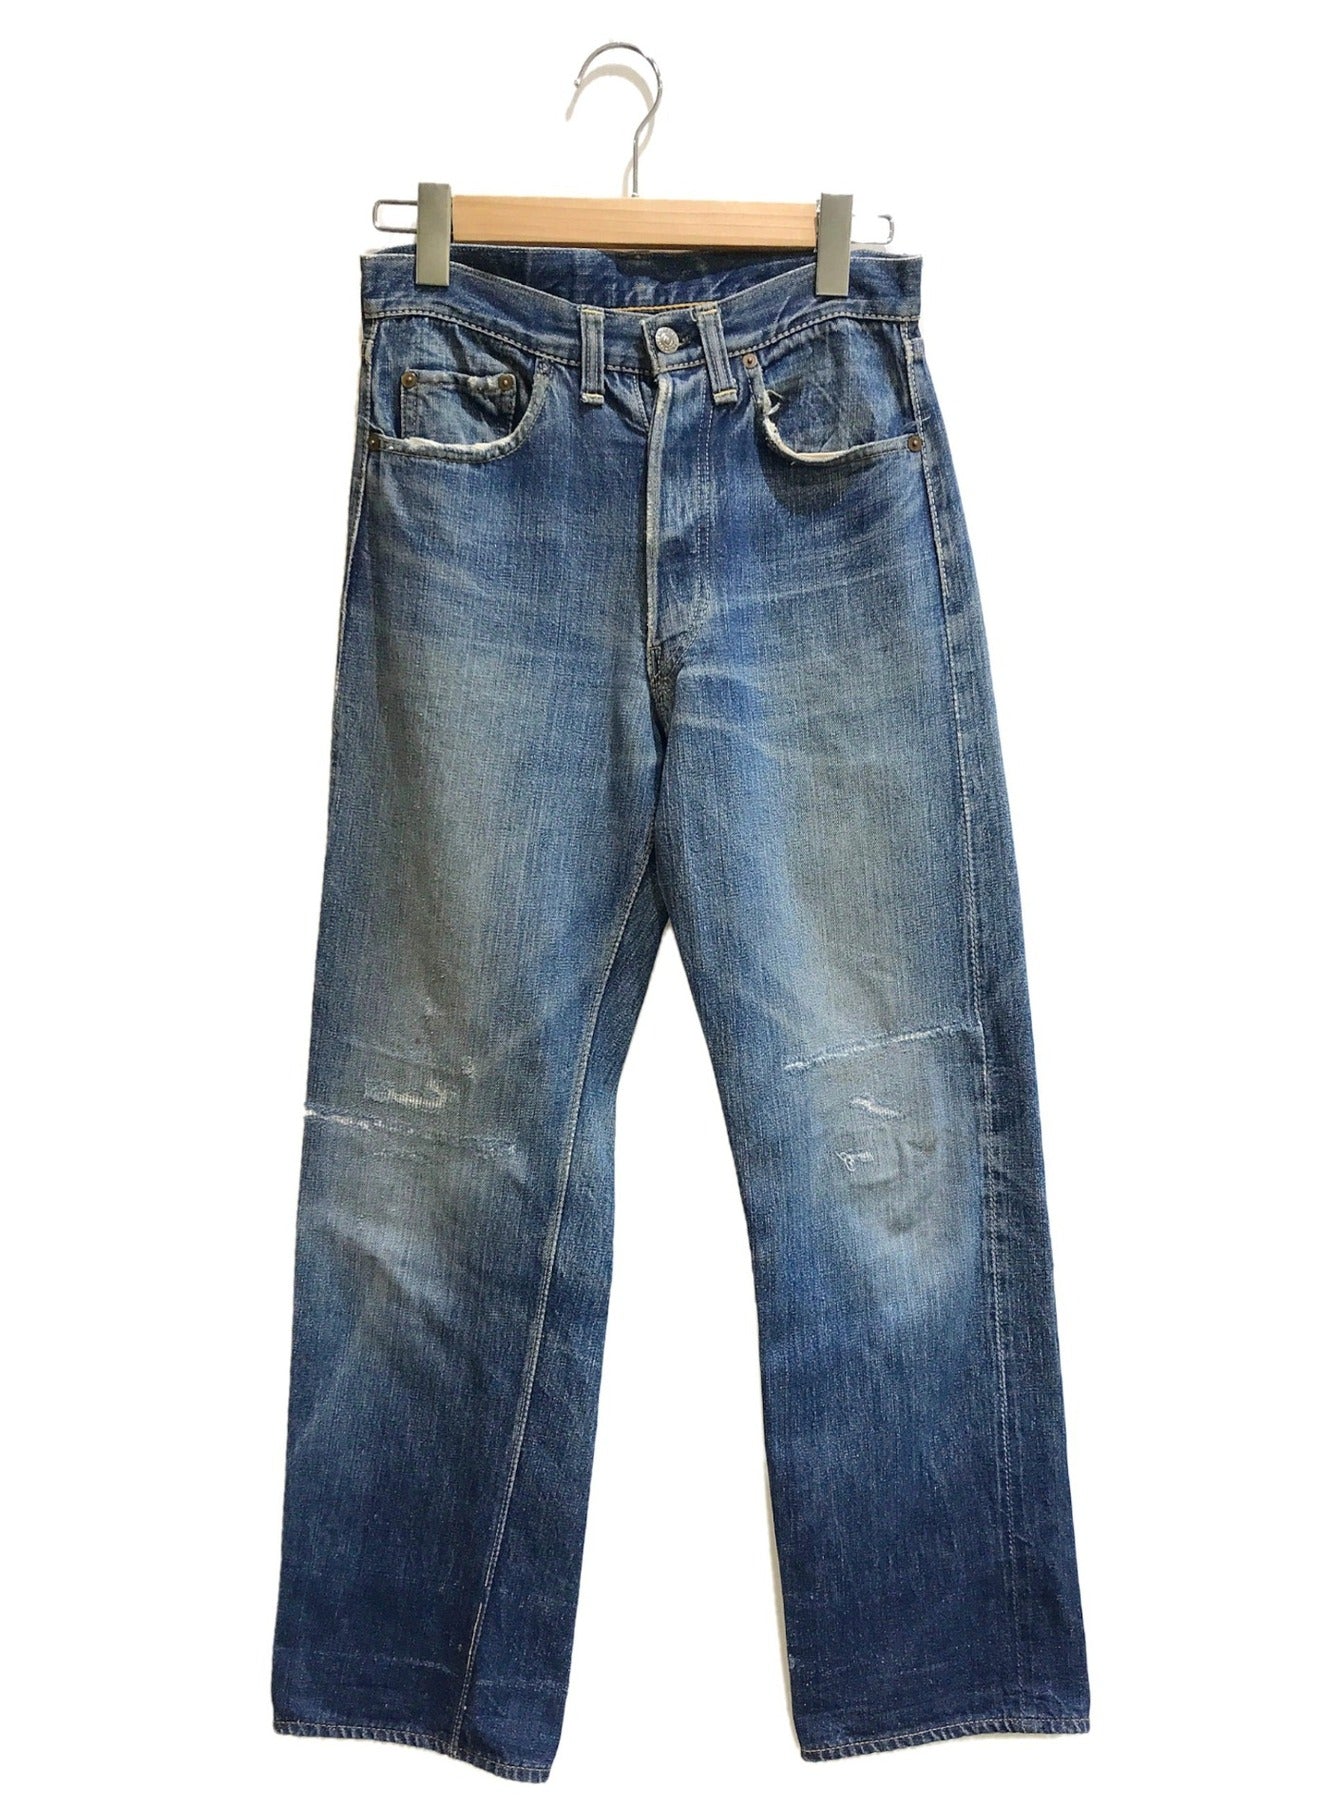 LEVI'S 503B XX Vintage Denim Pants Model 47, leather patch, two-prong